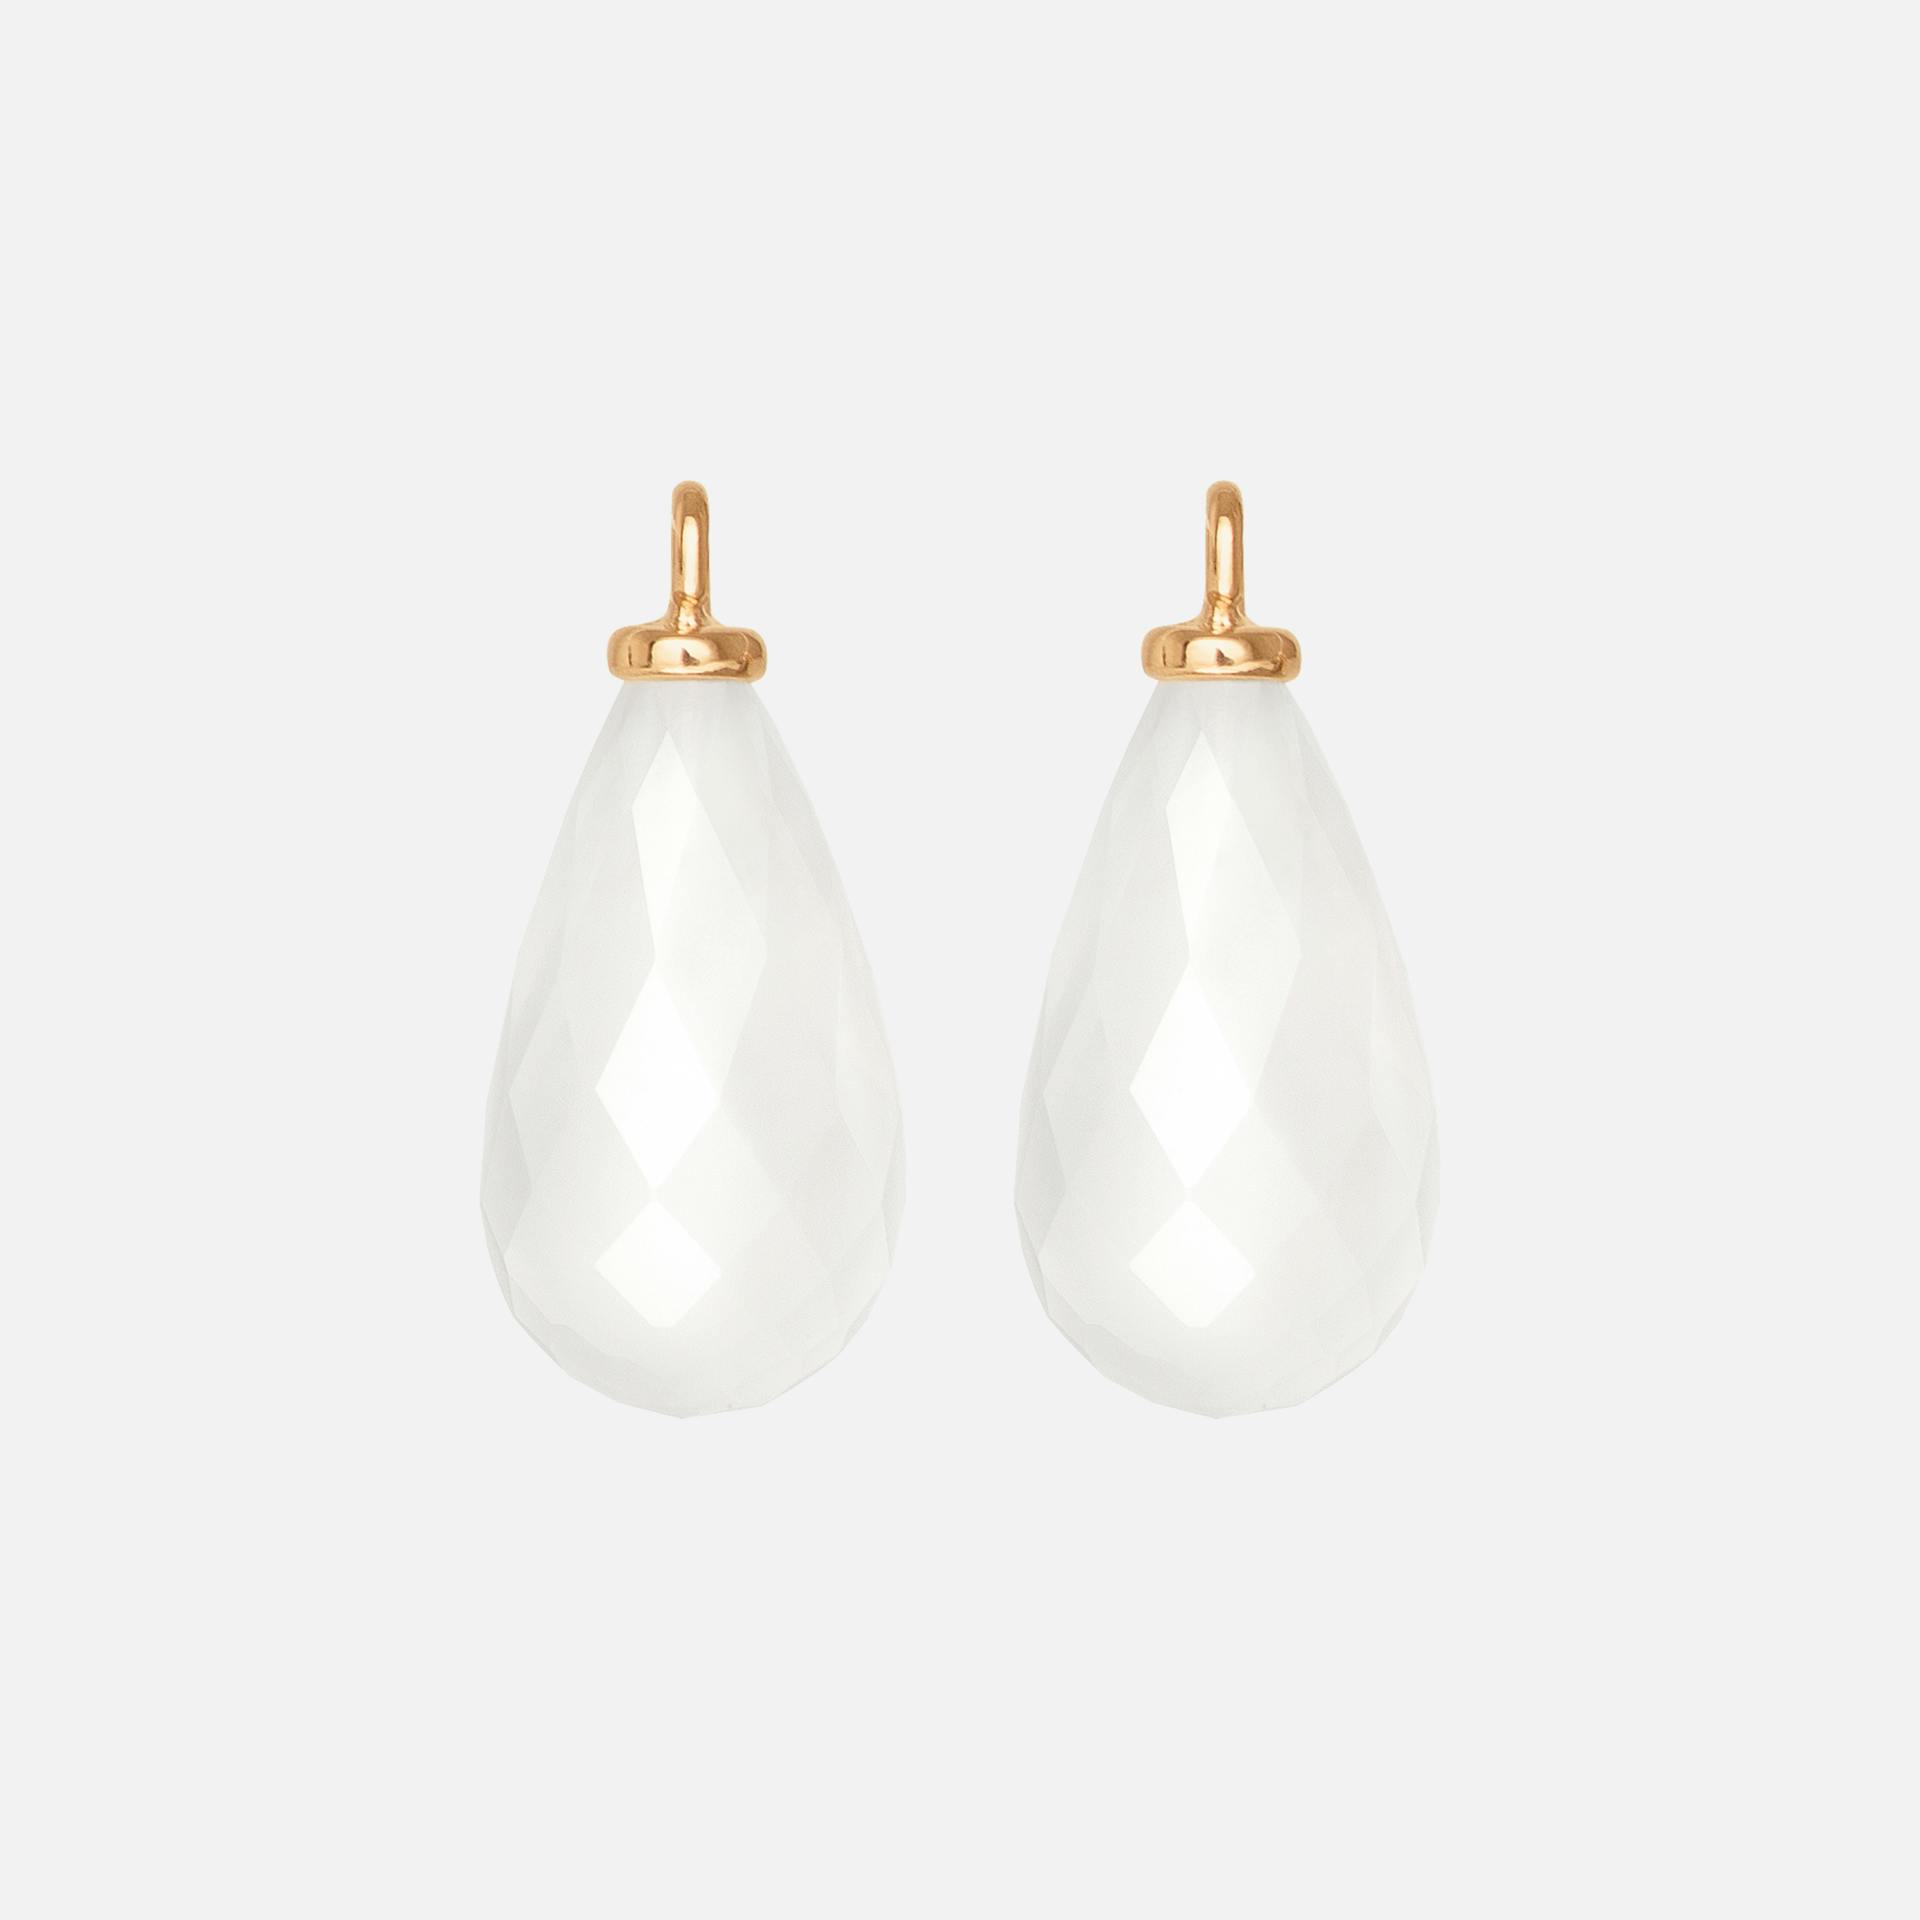 Earring pendant drop 18k gold with milky quartz